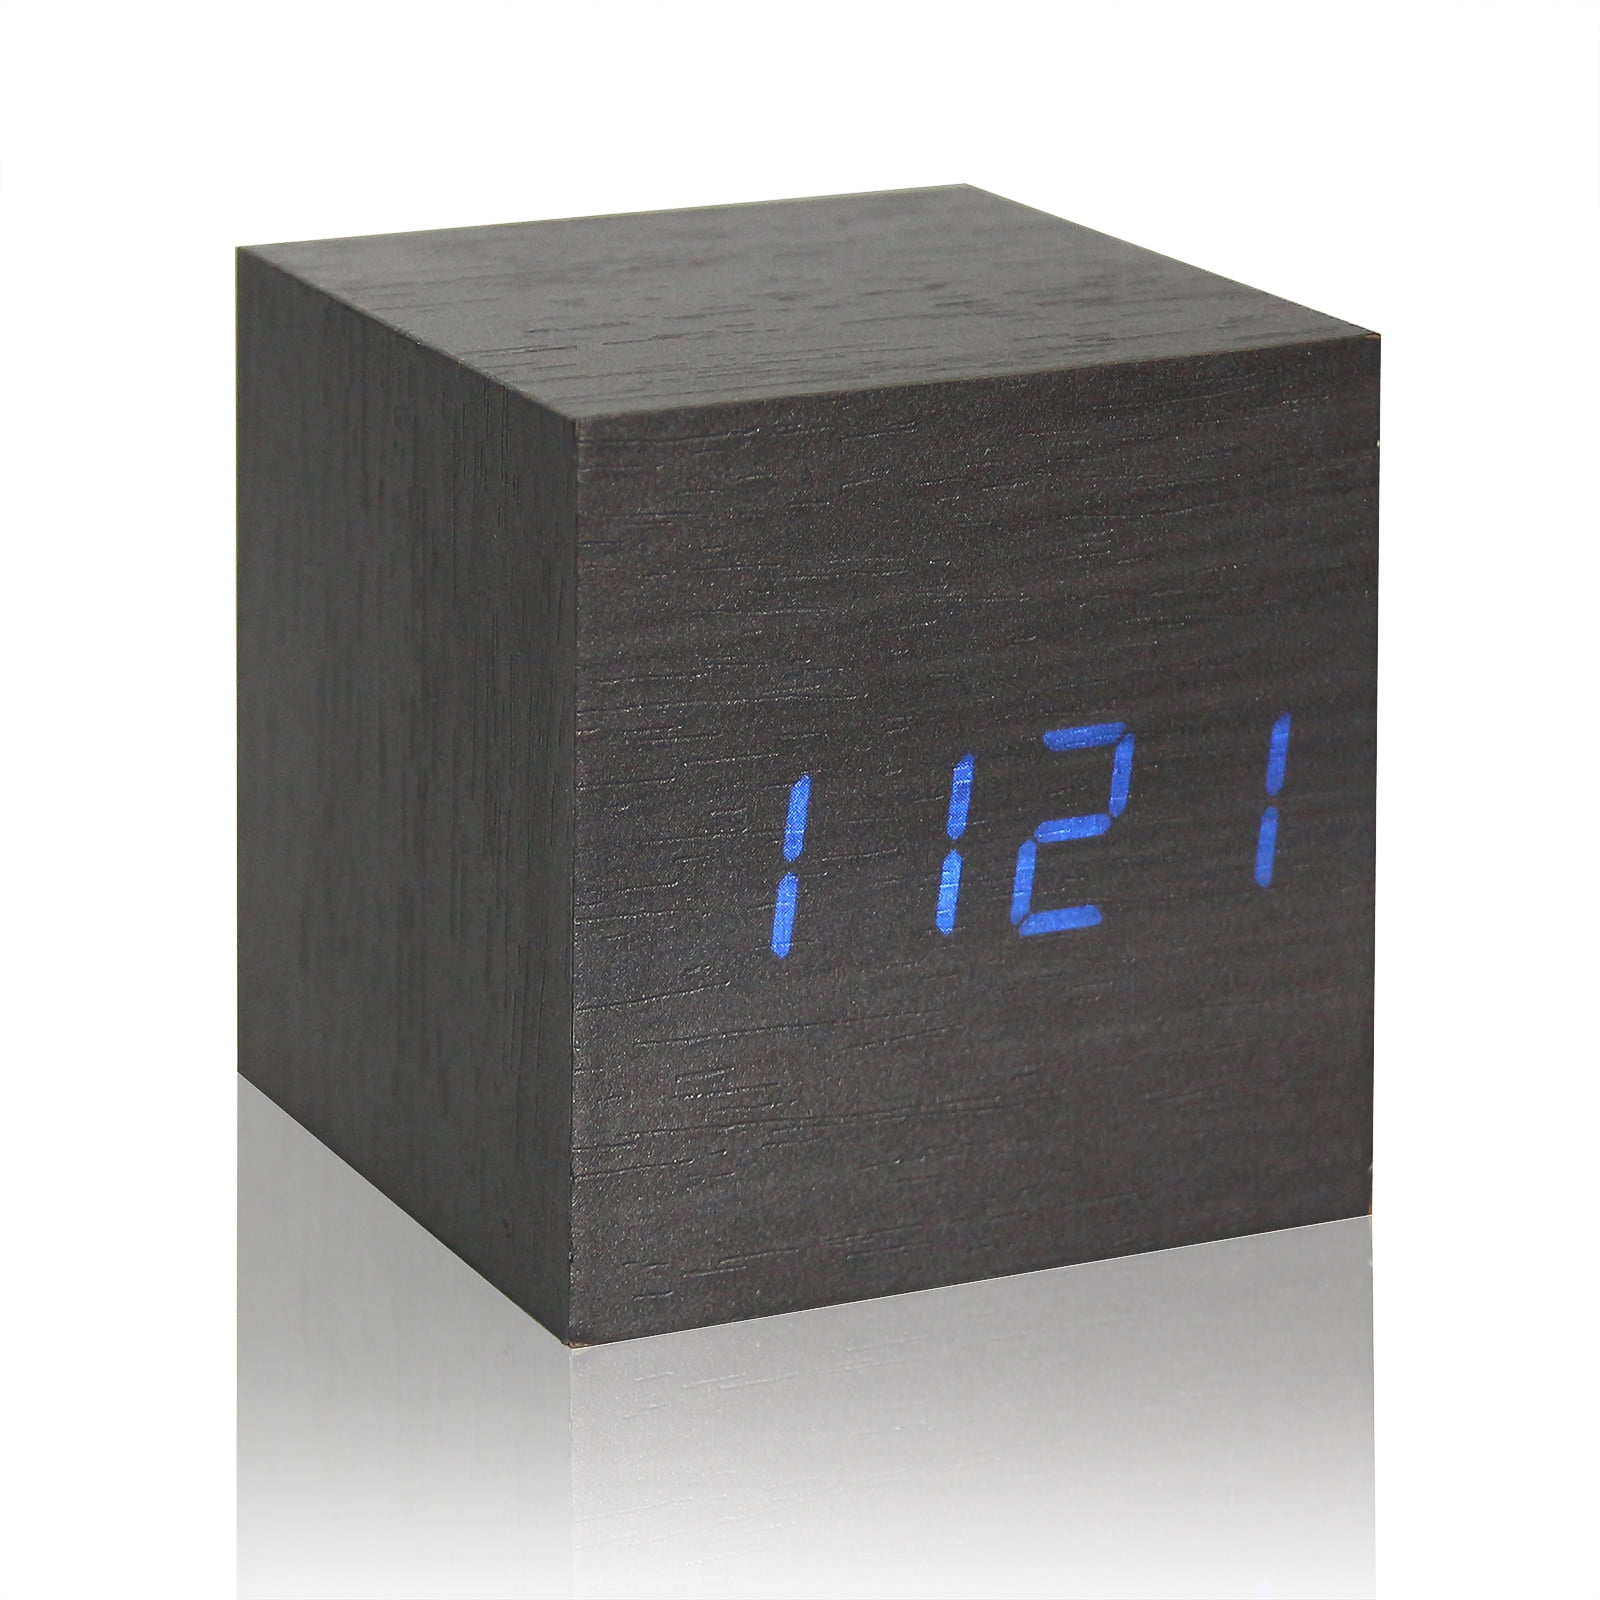 Unique Cube Wooden Wood Digital LED Desk Voice Control Alarm Clock Thermomet TC 